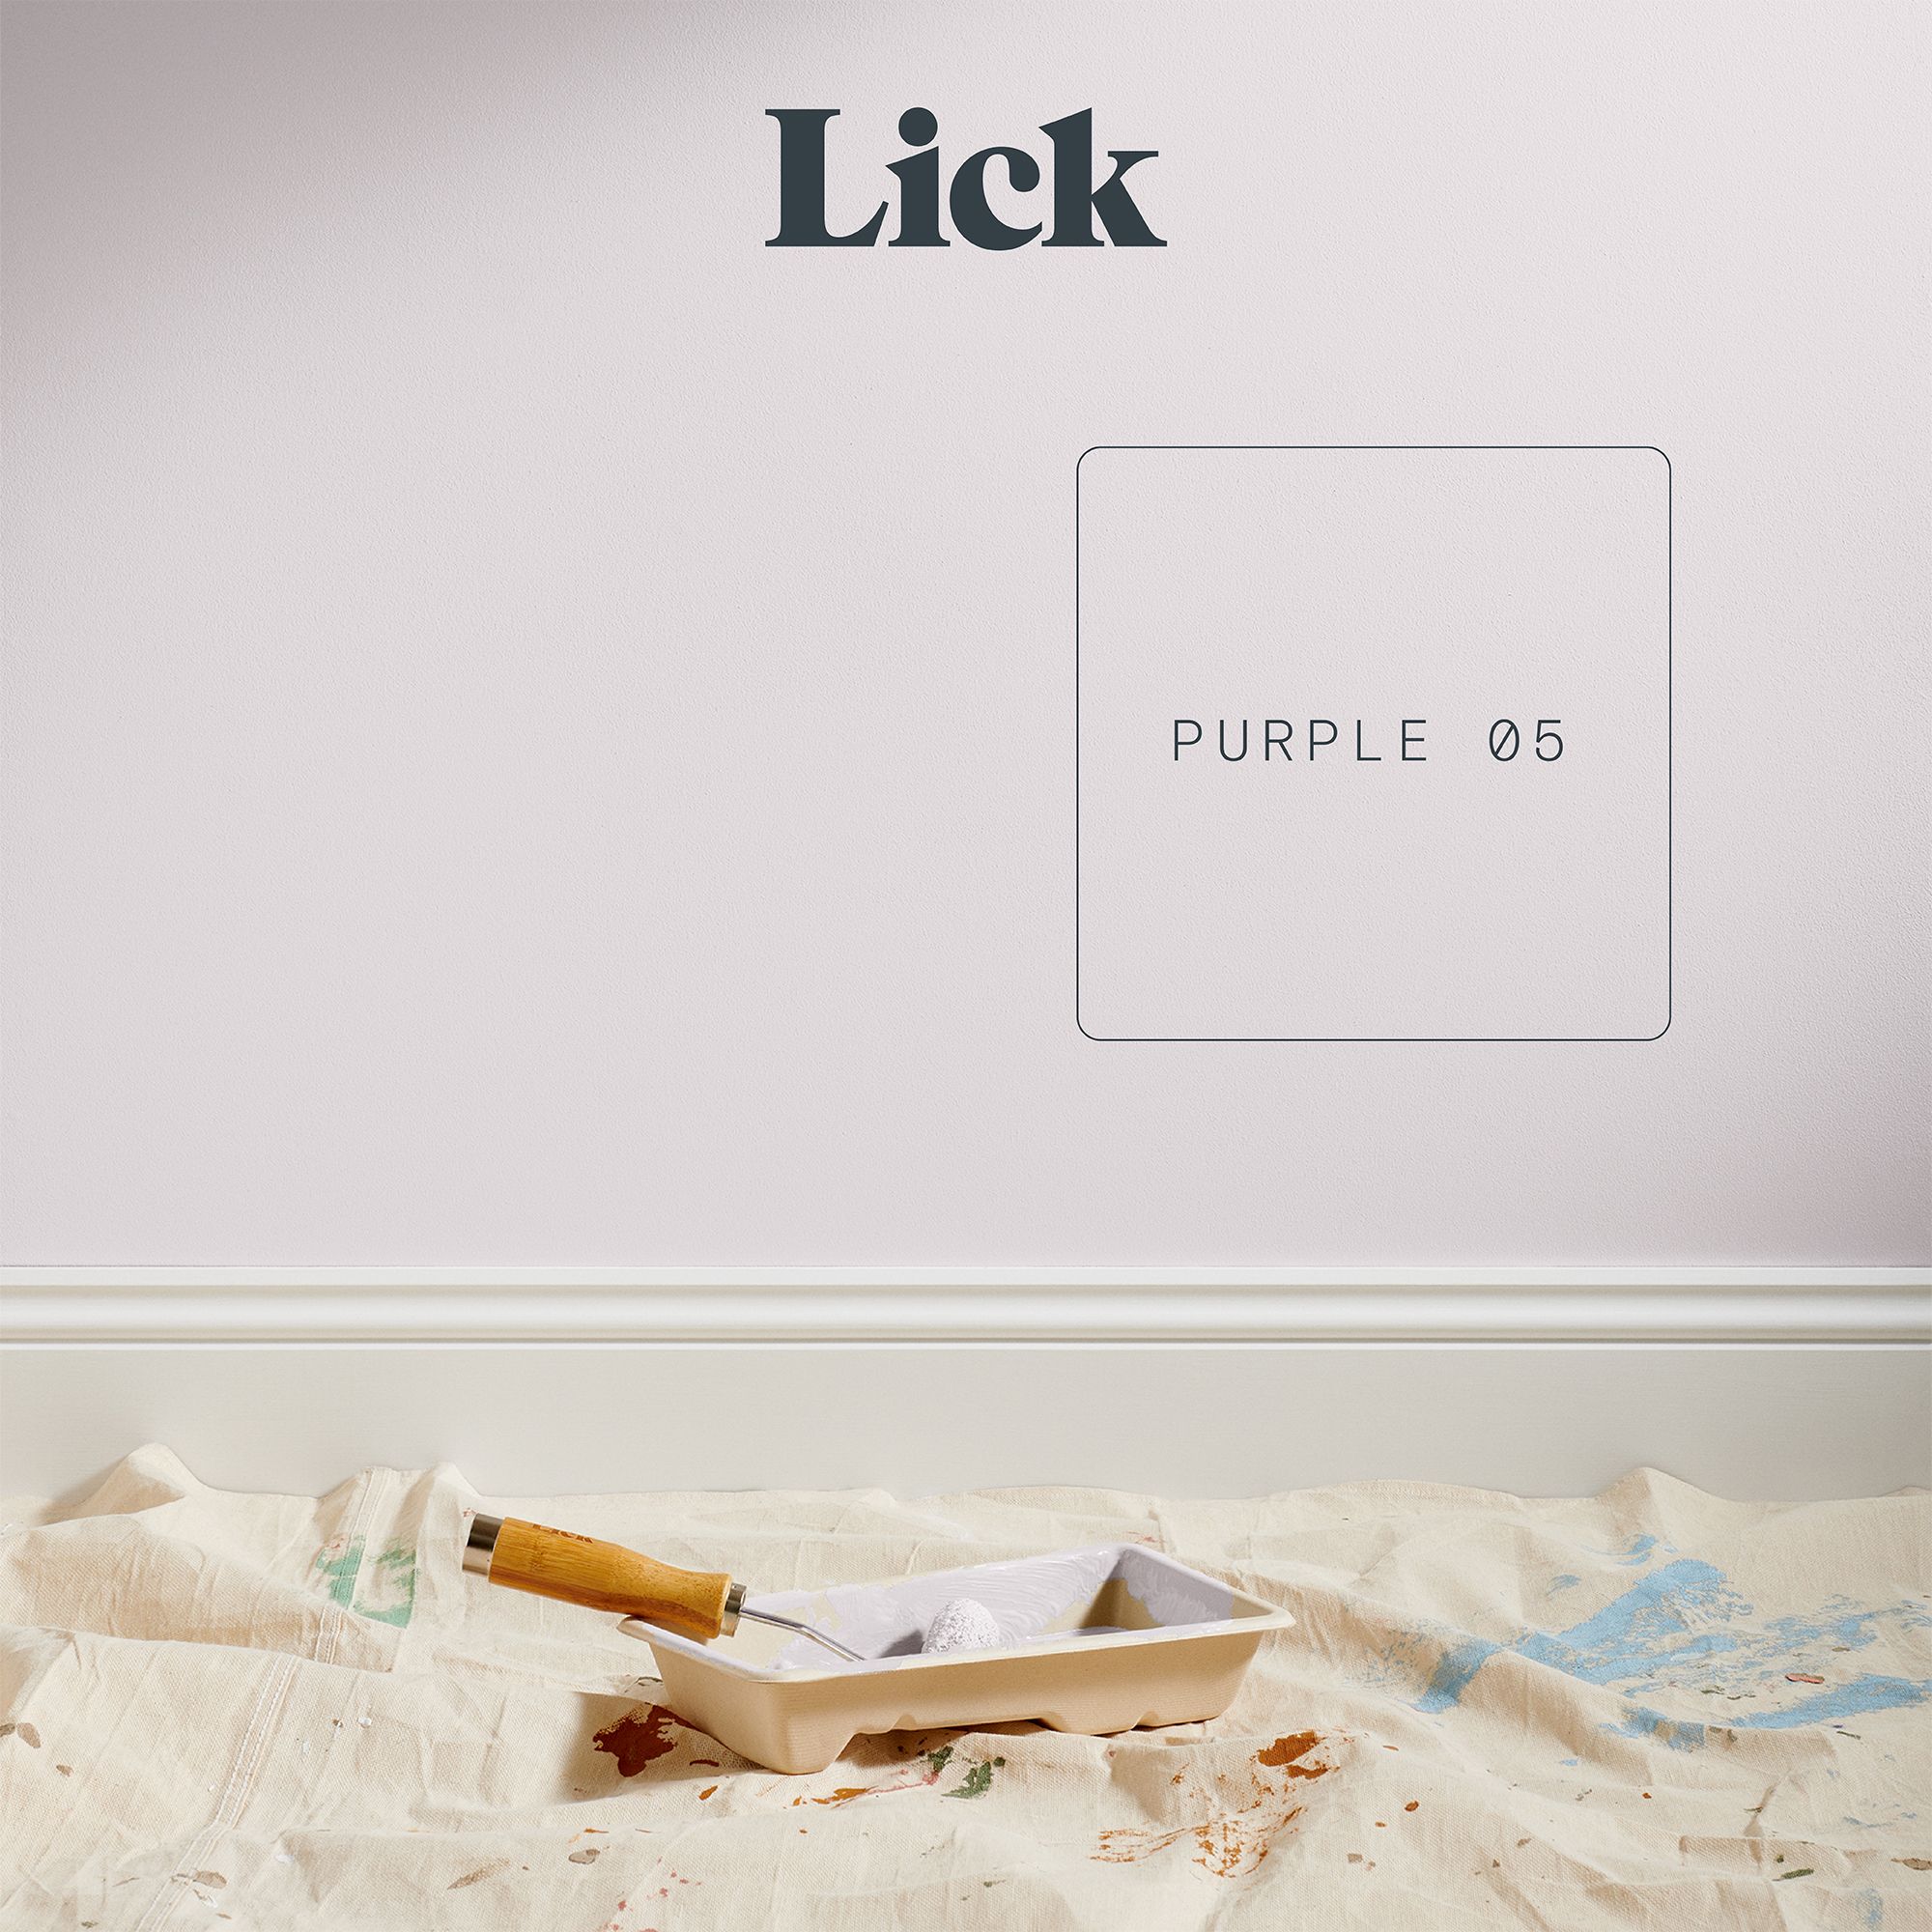 Lick Purple 05 Peel & stick Tester